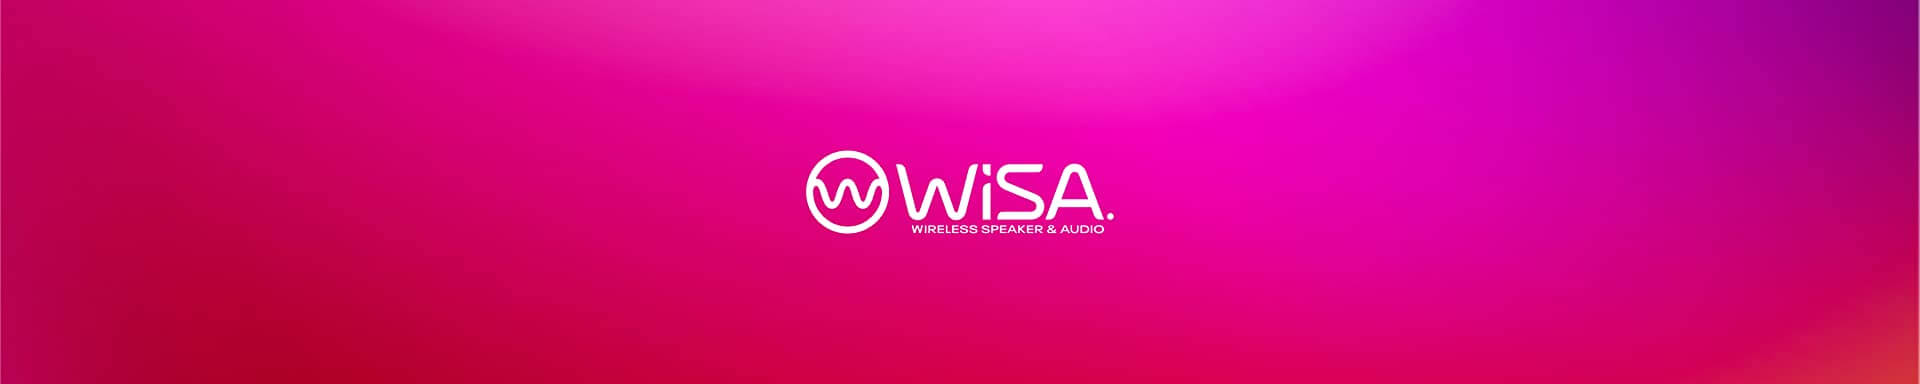 WiSA WIRELESS SPEAKER & AUDIO banner